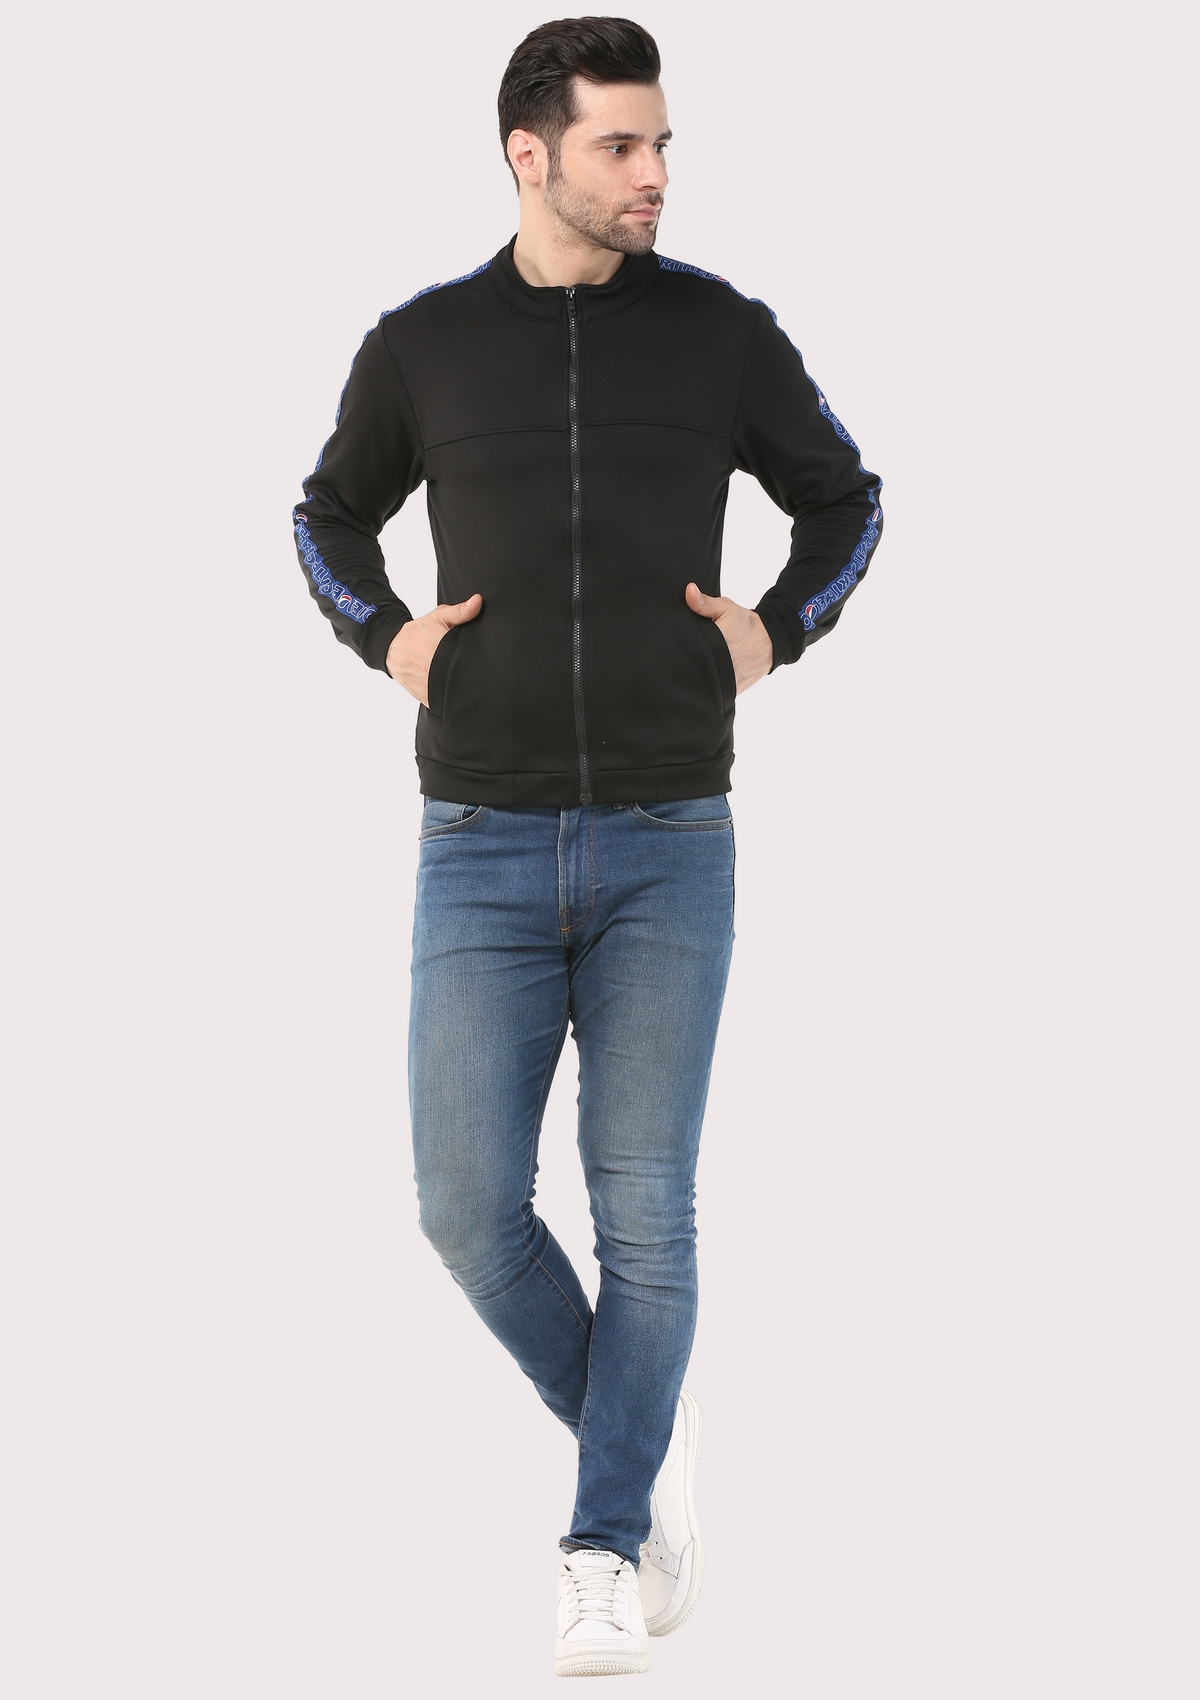 SOC PERFORMANCE | SOC Smart , Stylish & Warm Fleece Jacket 2